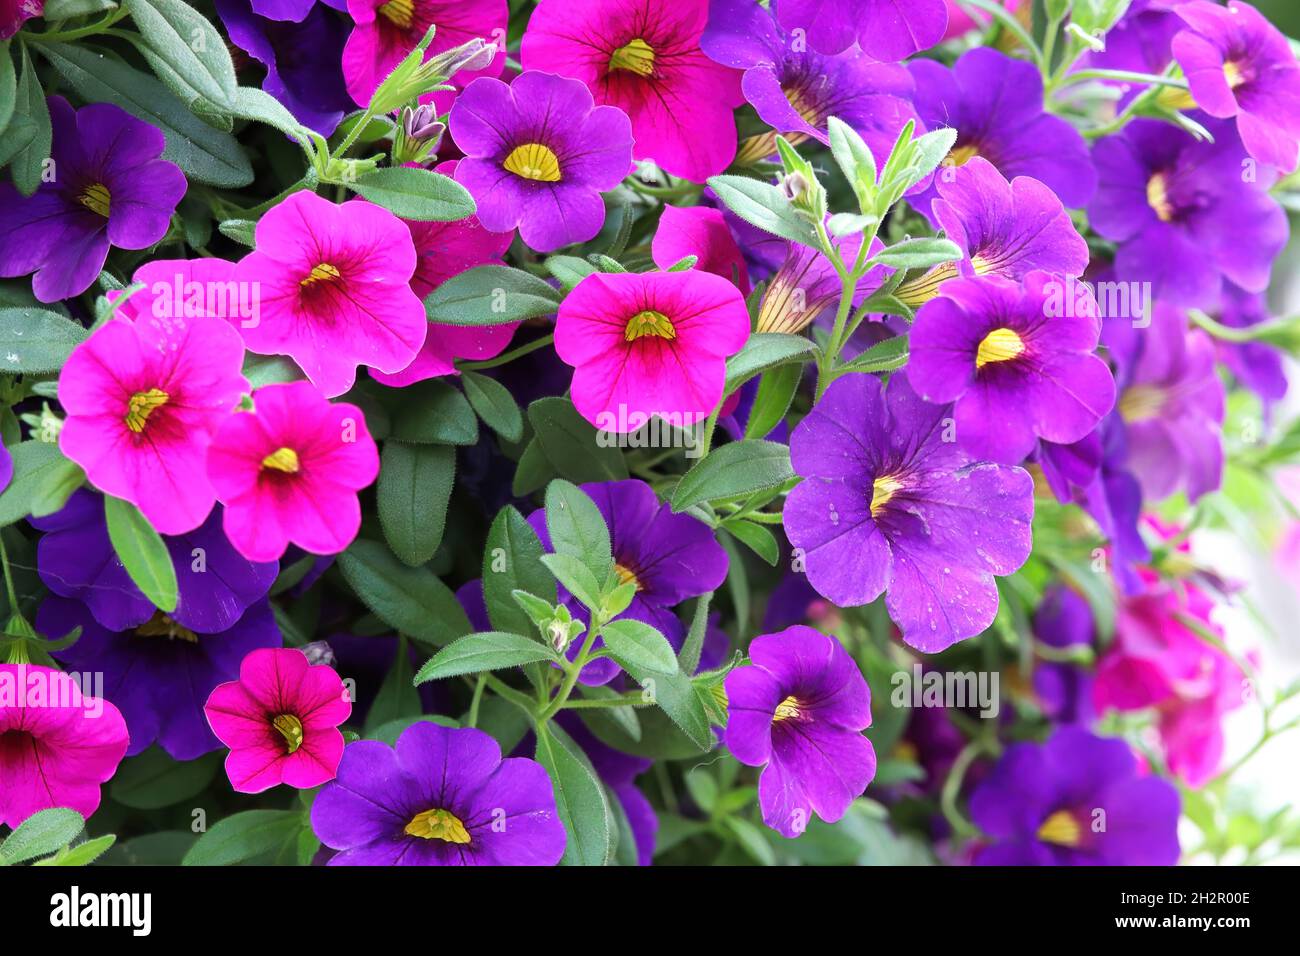 Background of pink purple Calibrachoa flowers in bloom Stock Photo